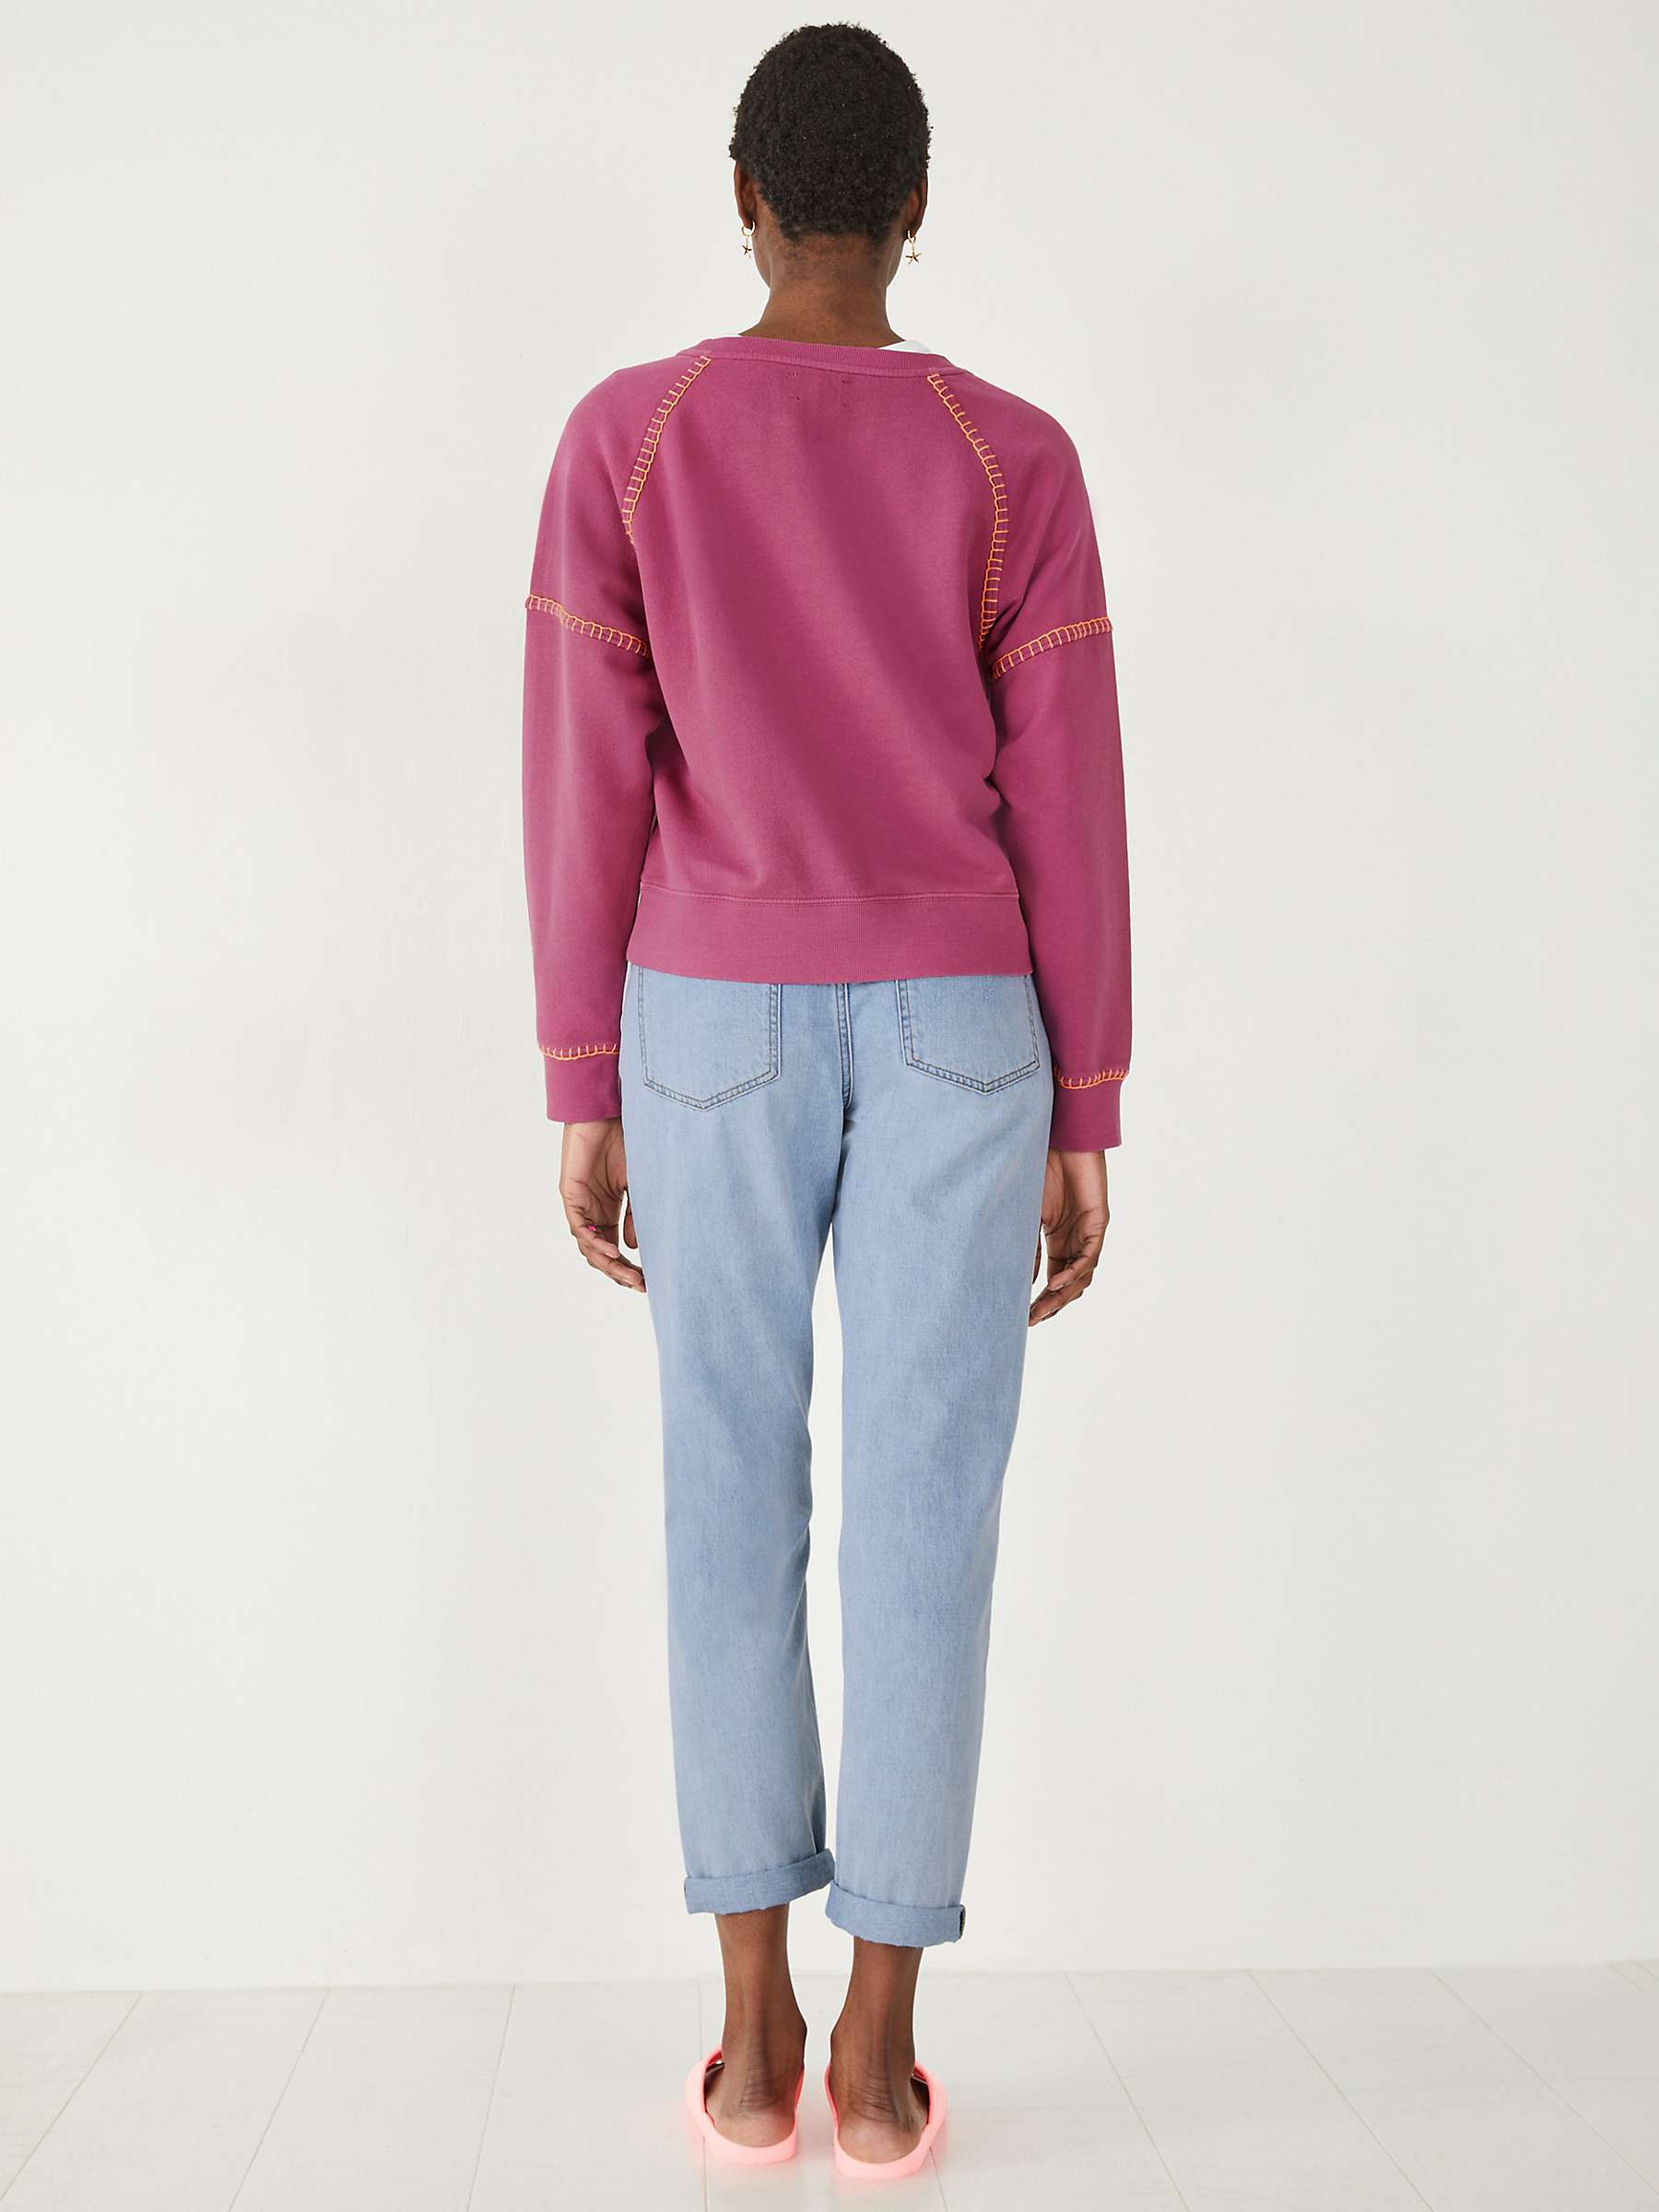 Buy HUSH Contrast Stitch Sweatshirt, Fuchsia Pink Online at johnlewis.com